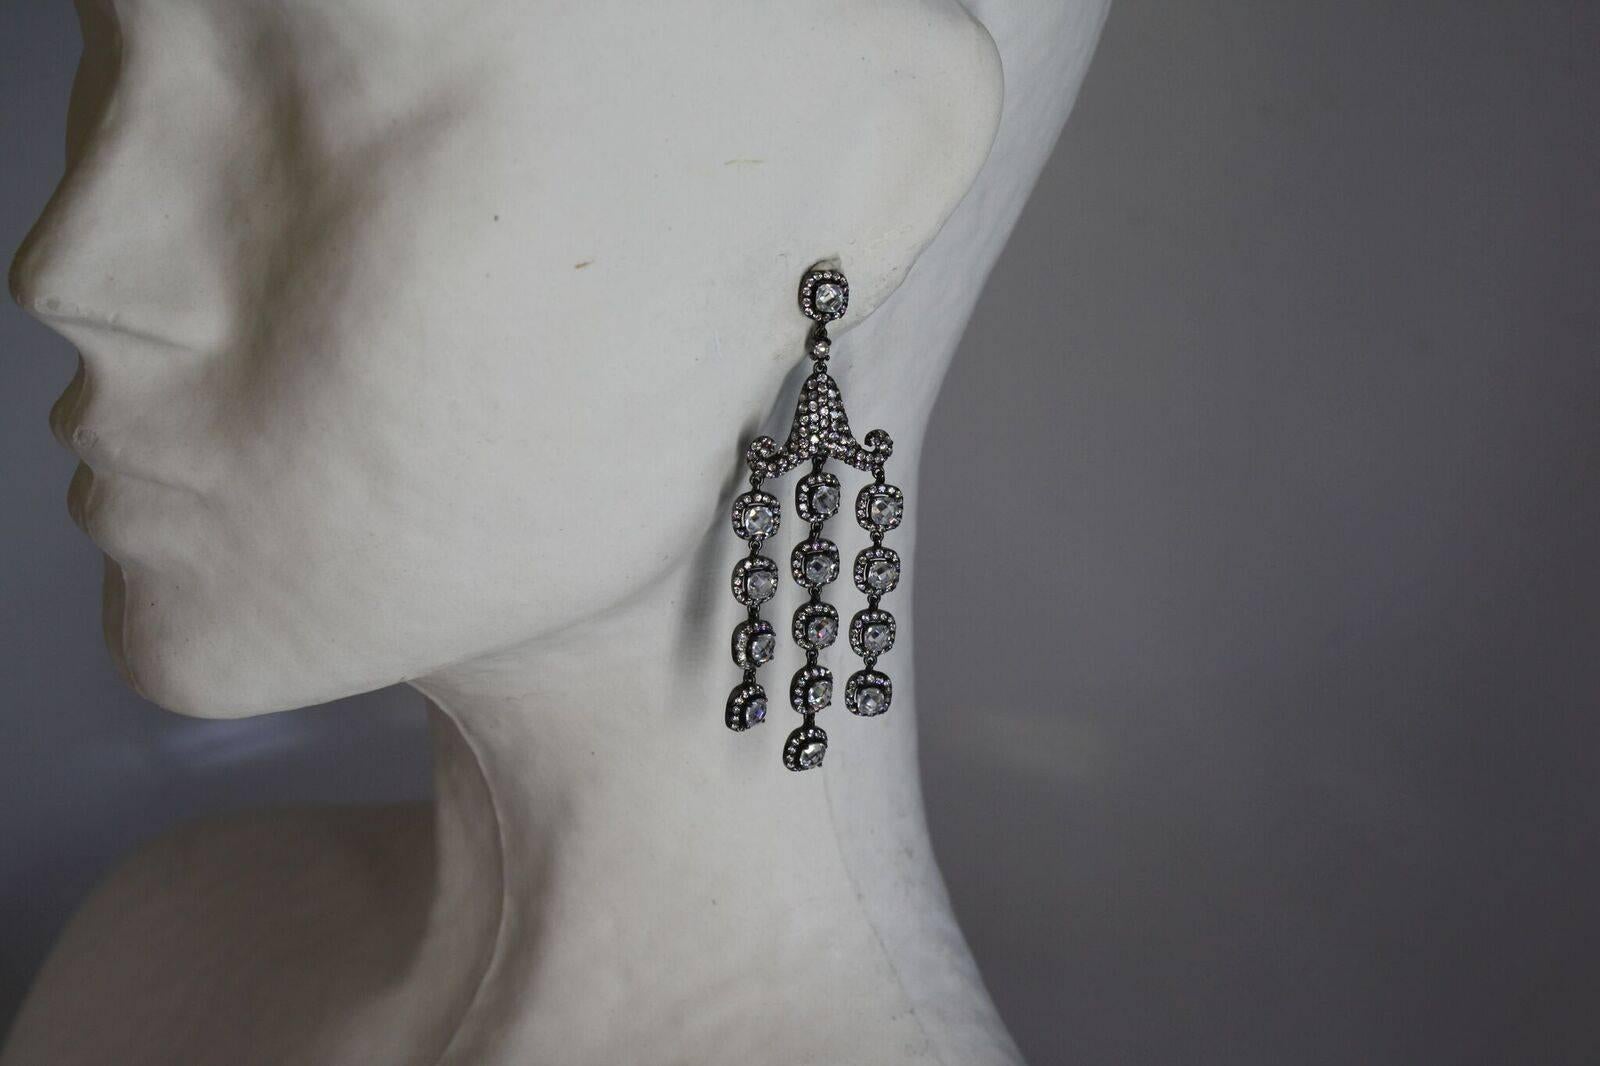 Zircon and black rhodium chandelier pierced earrings from Italian designer Ultima Edizione. 